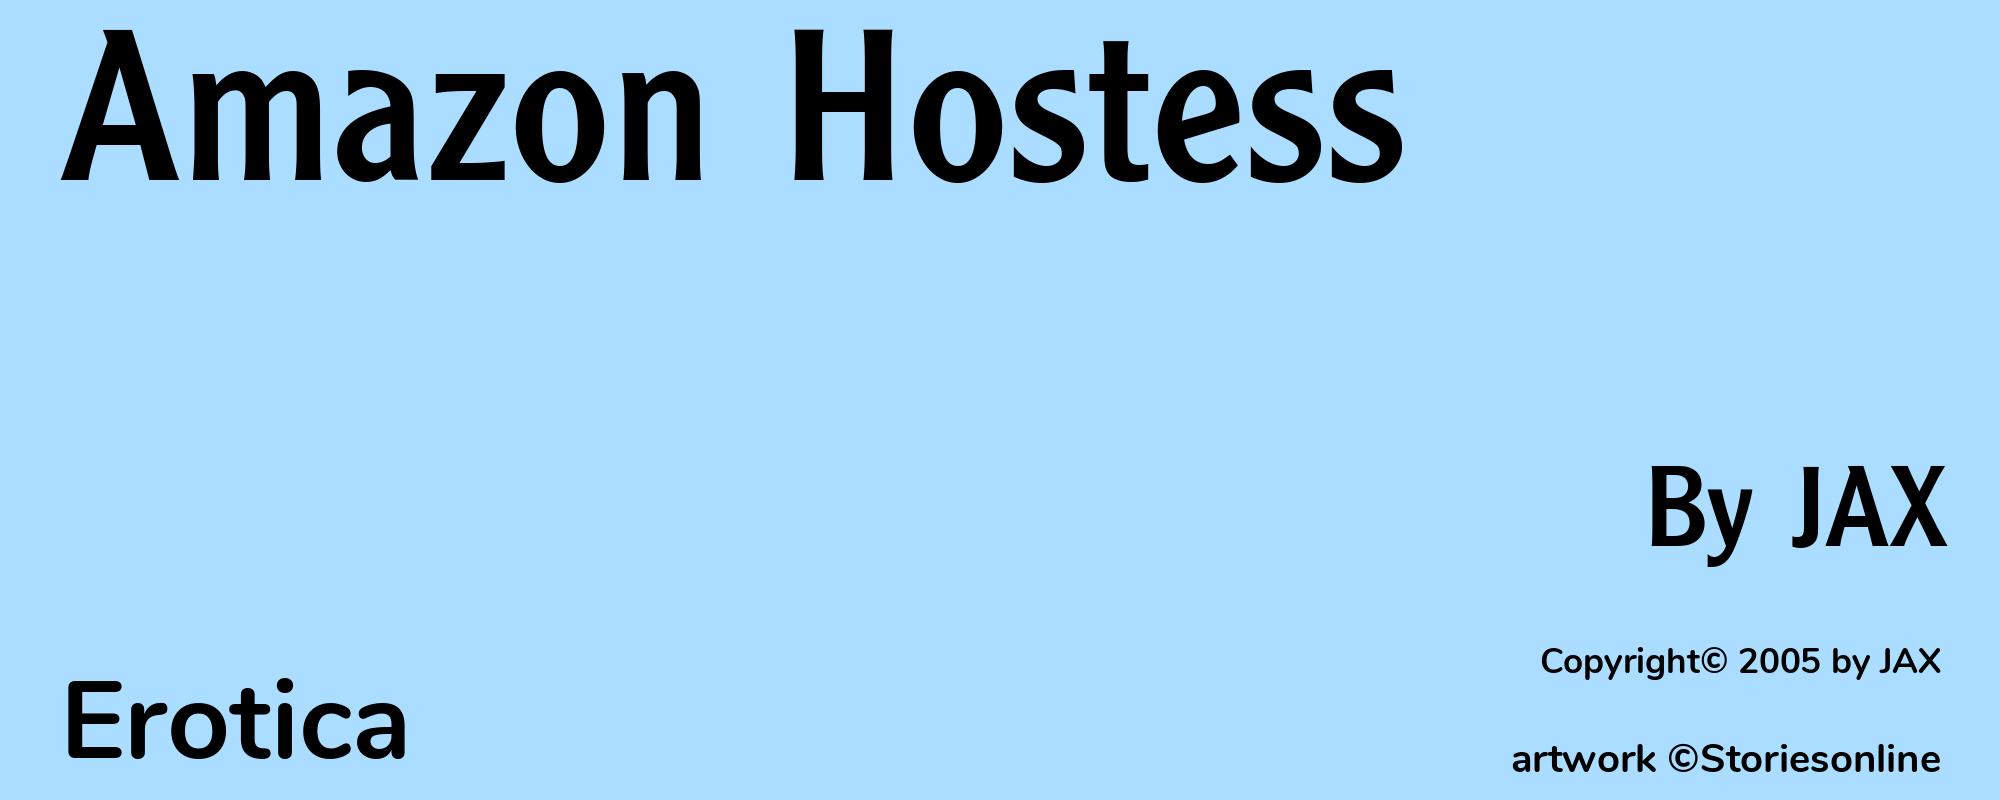 Amazon Hostess - Cover